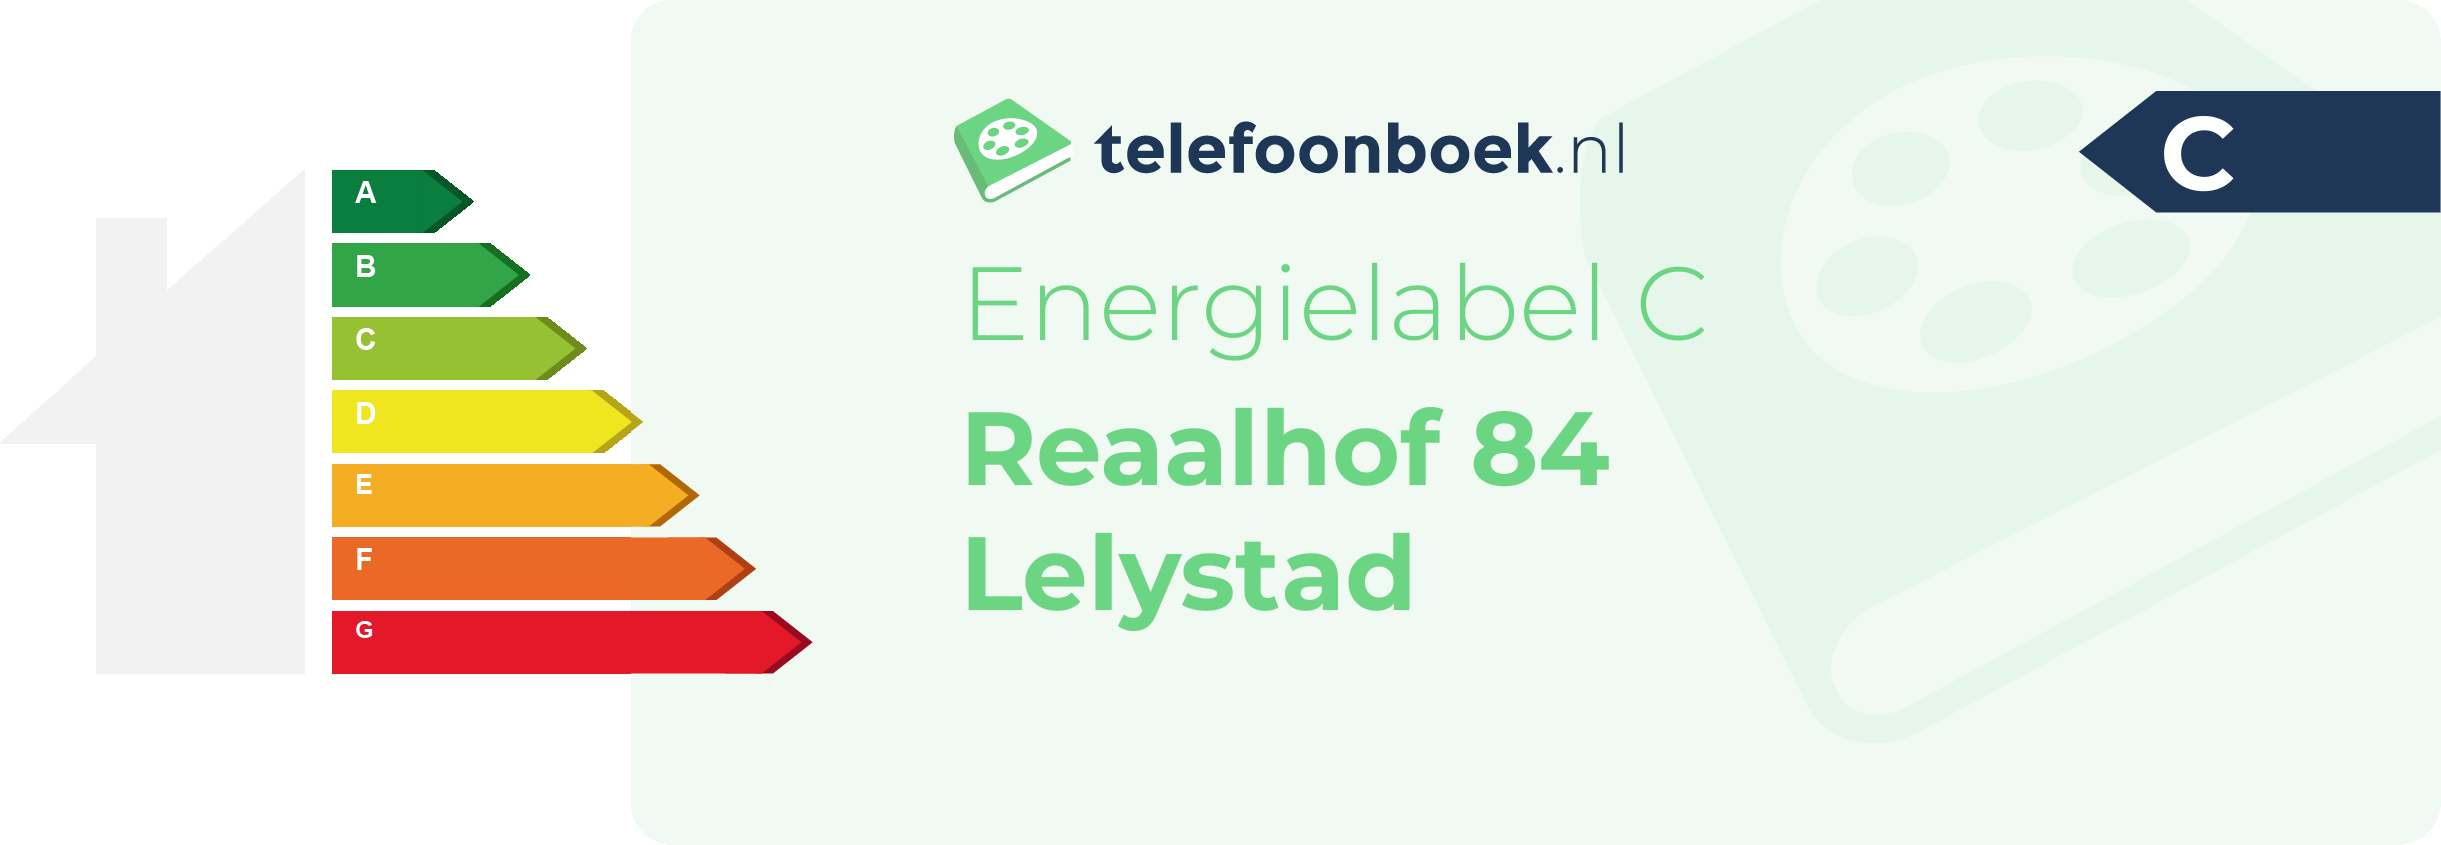 Energielabel Reaalhof 84 Lelystad